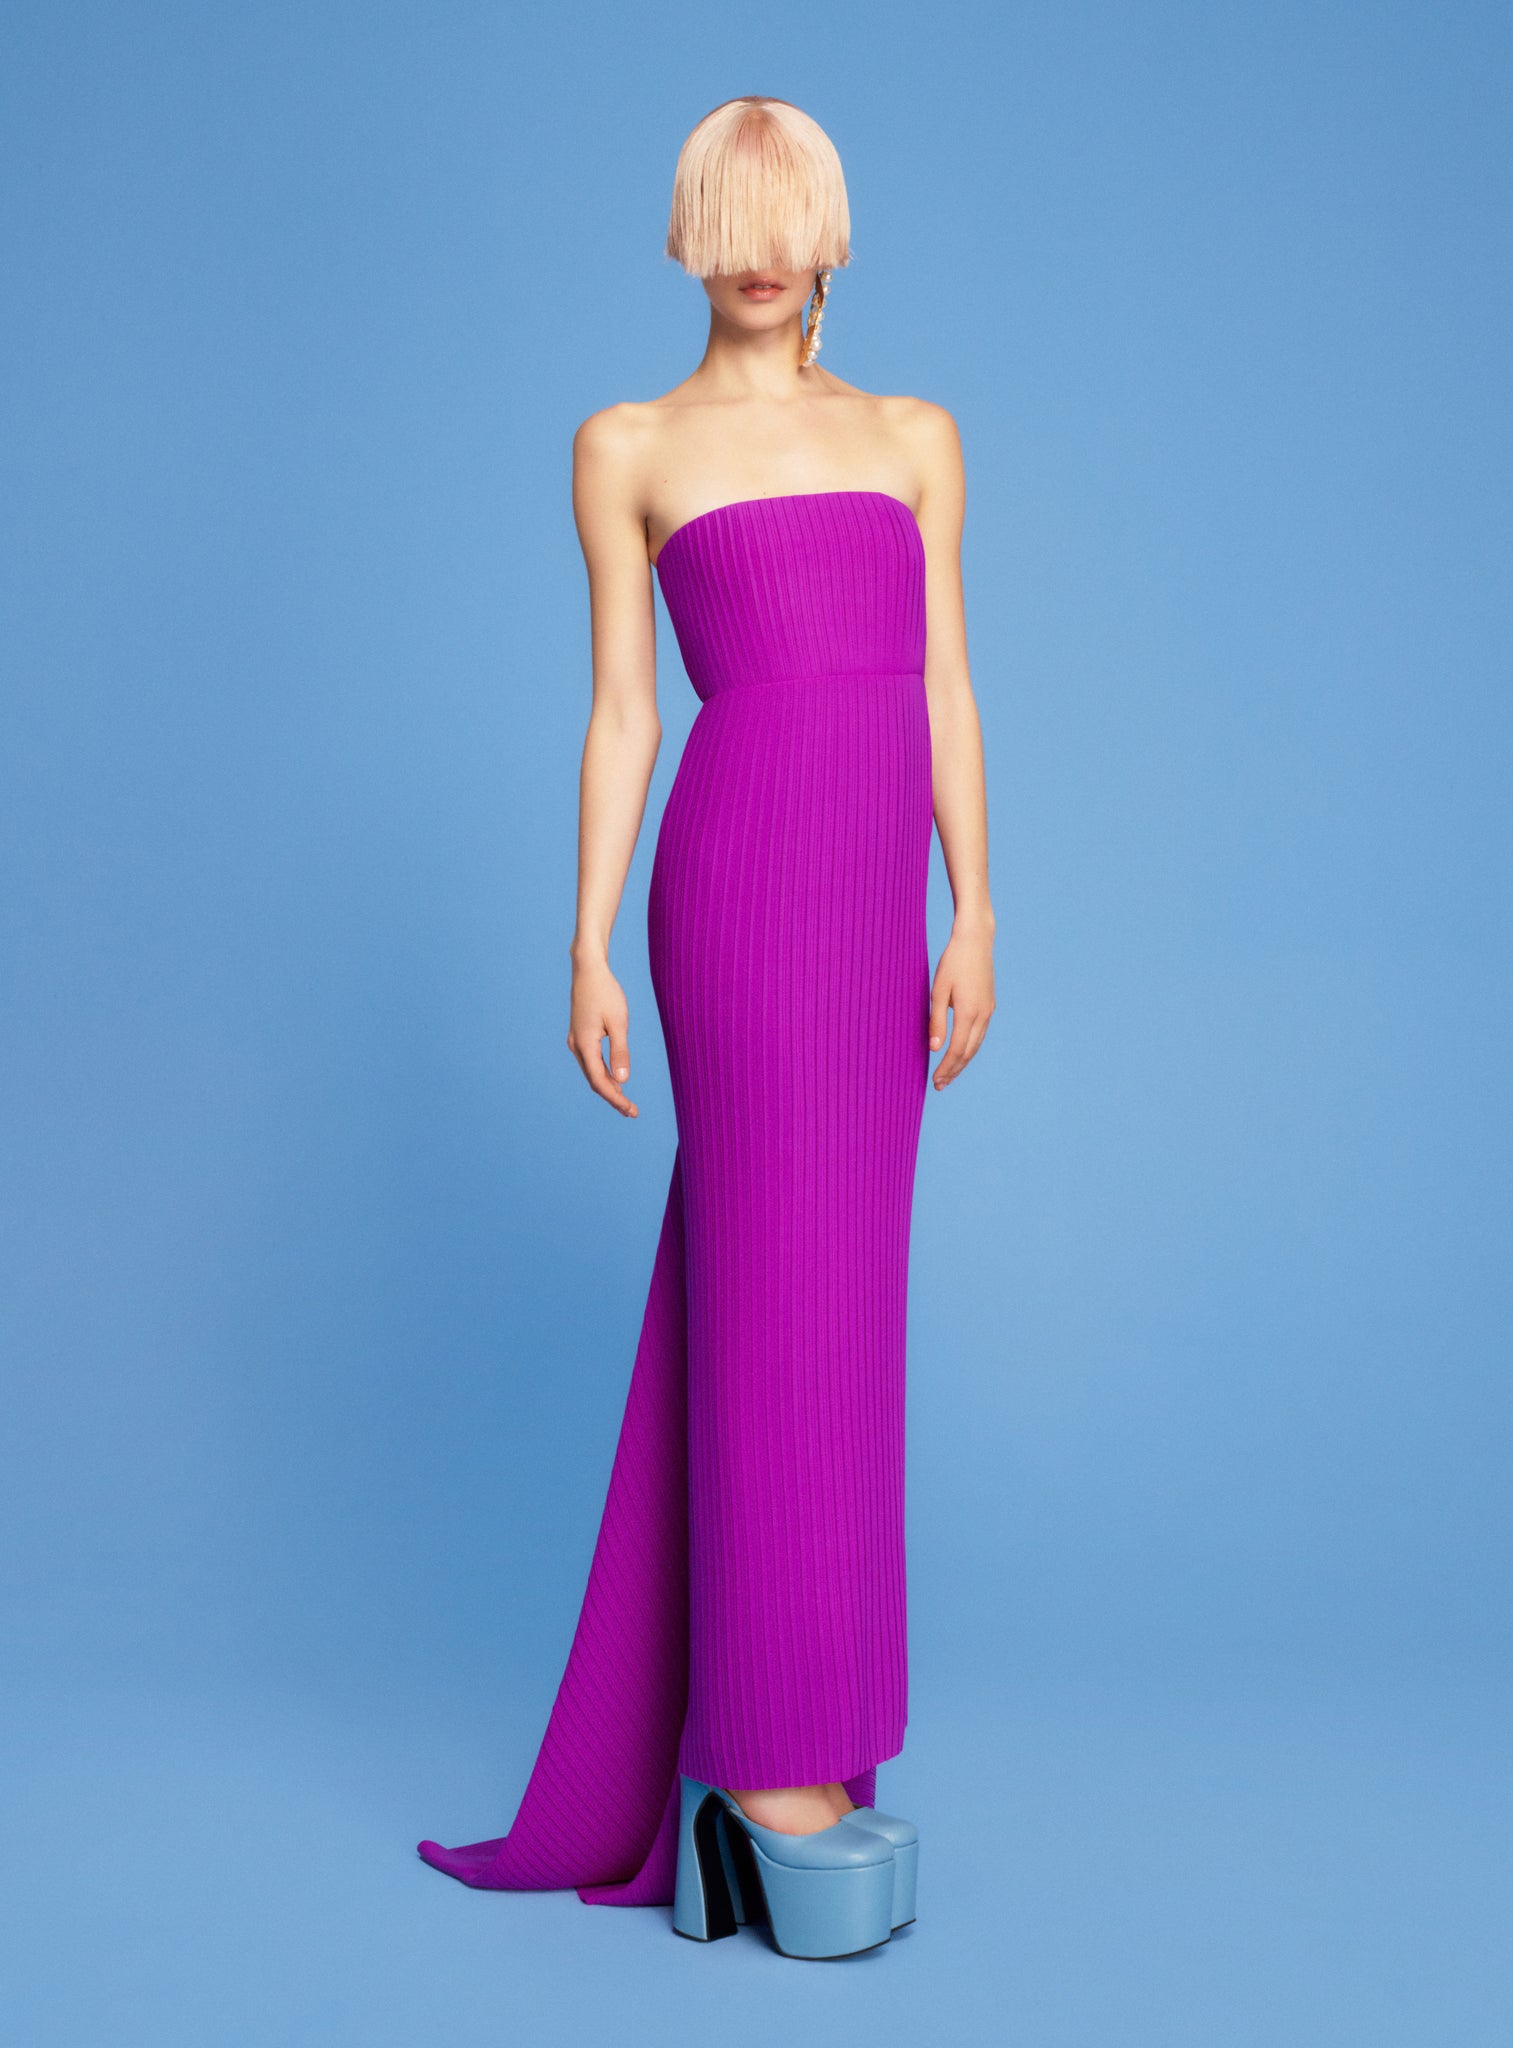 The Harlee Maxi Dress in Ultra Purple